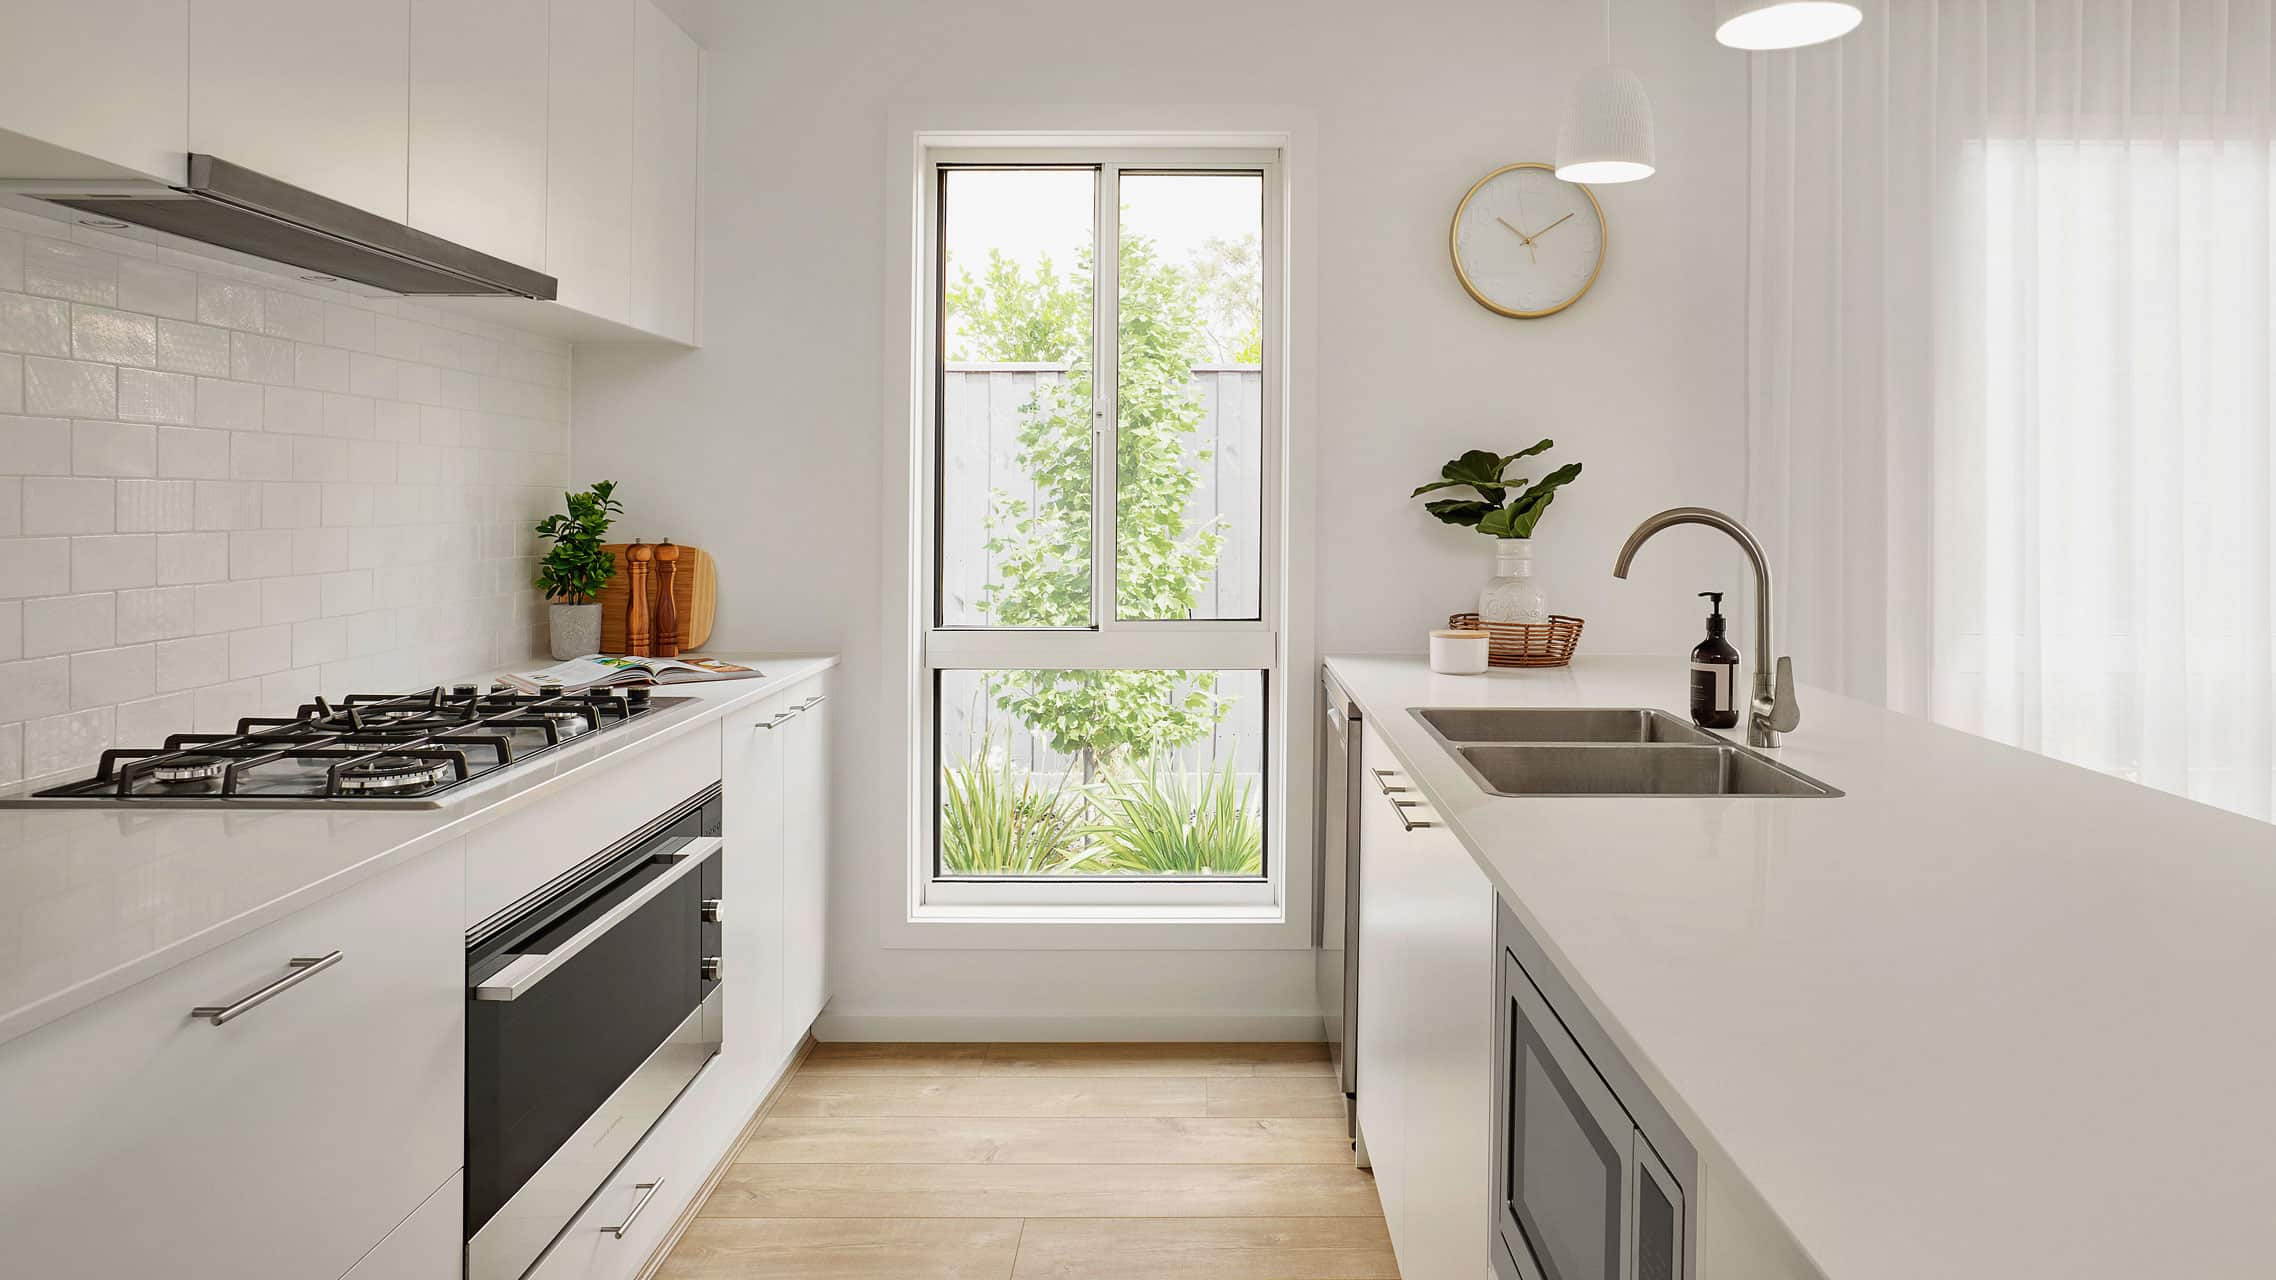 Patio sliding window in a kitchen